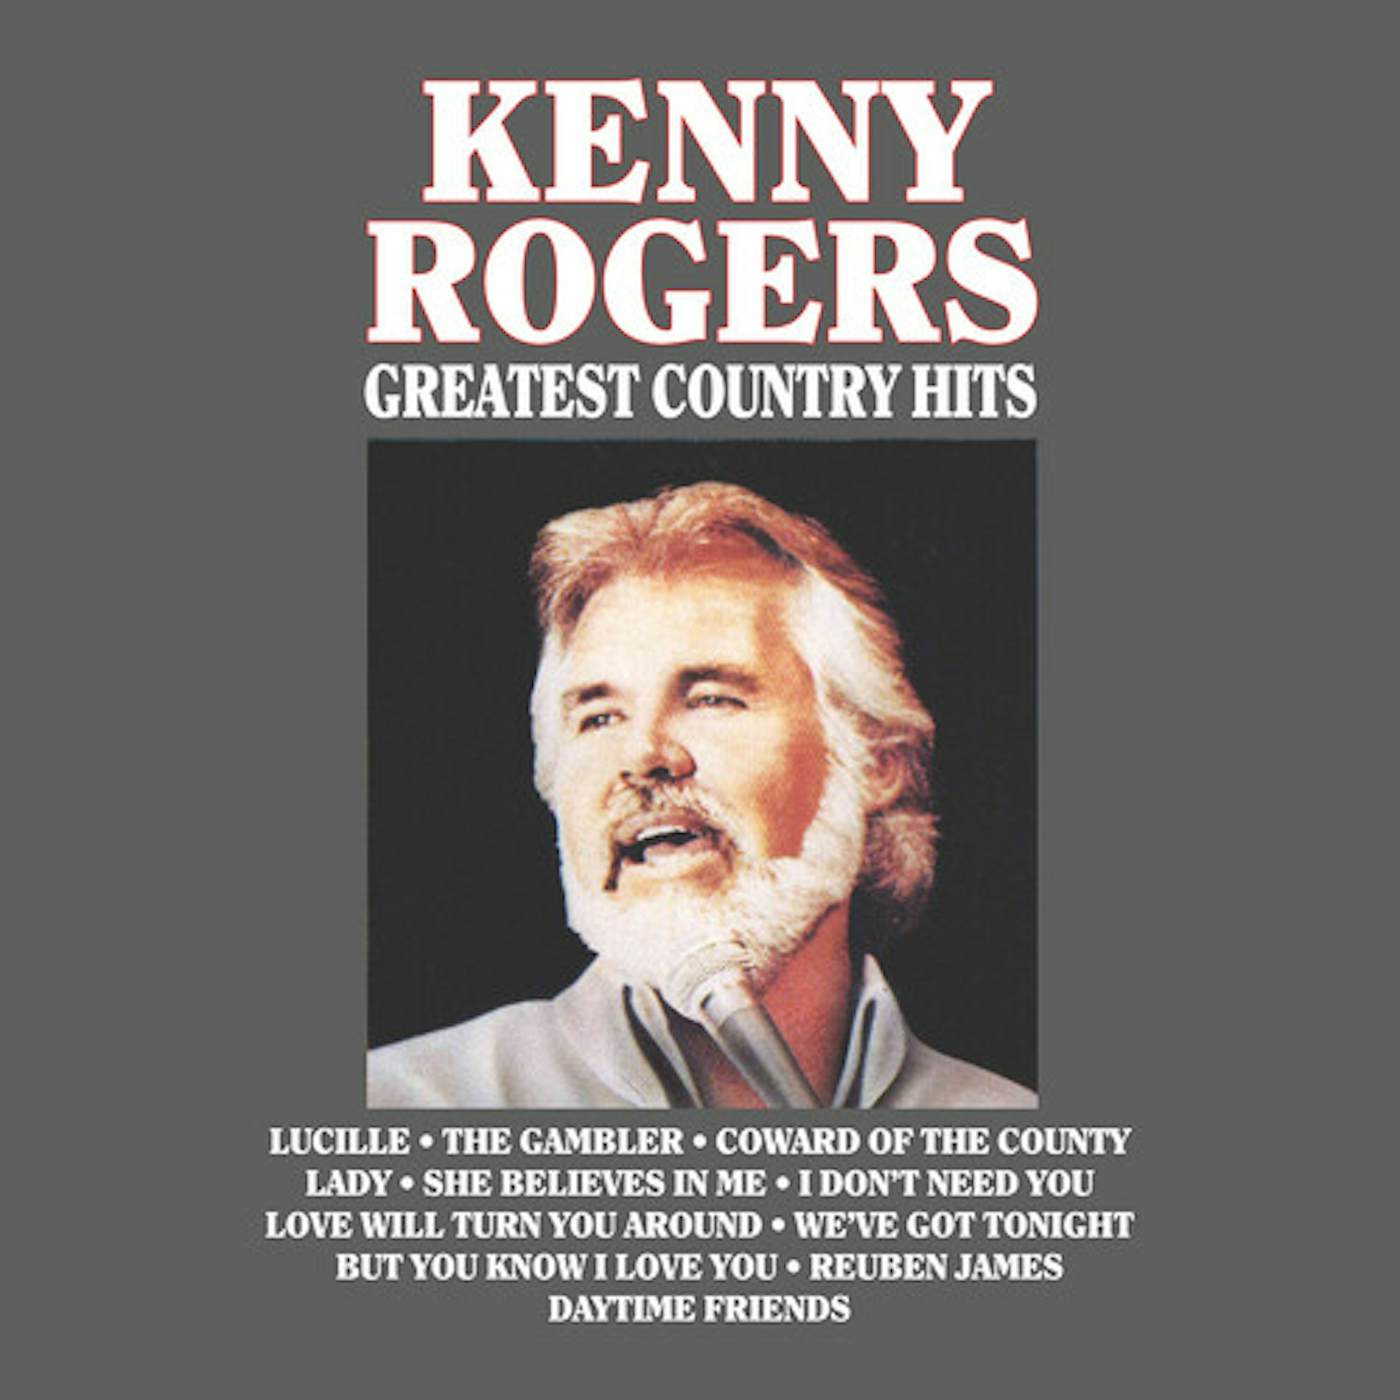 Kenny Rogers Greatest Hits Vinyl Record